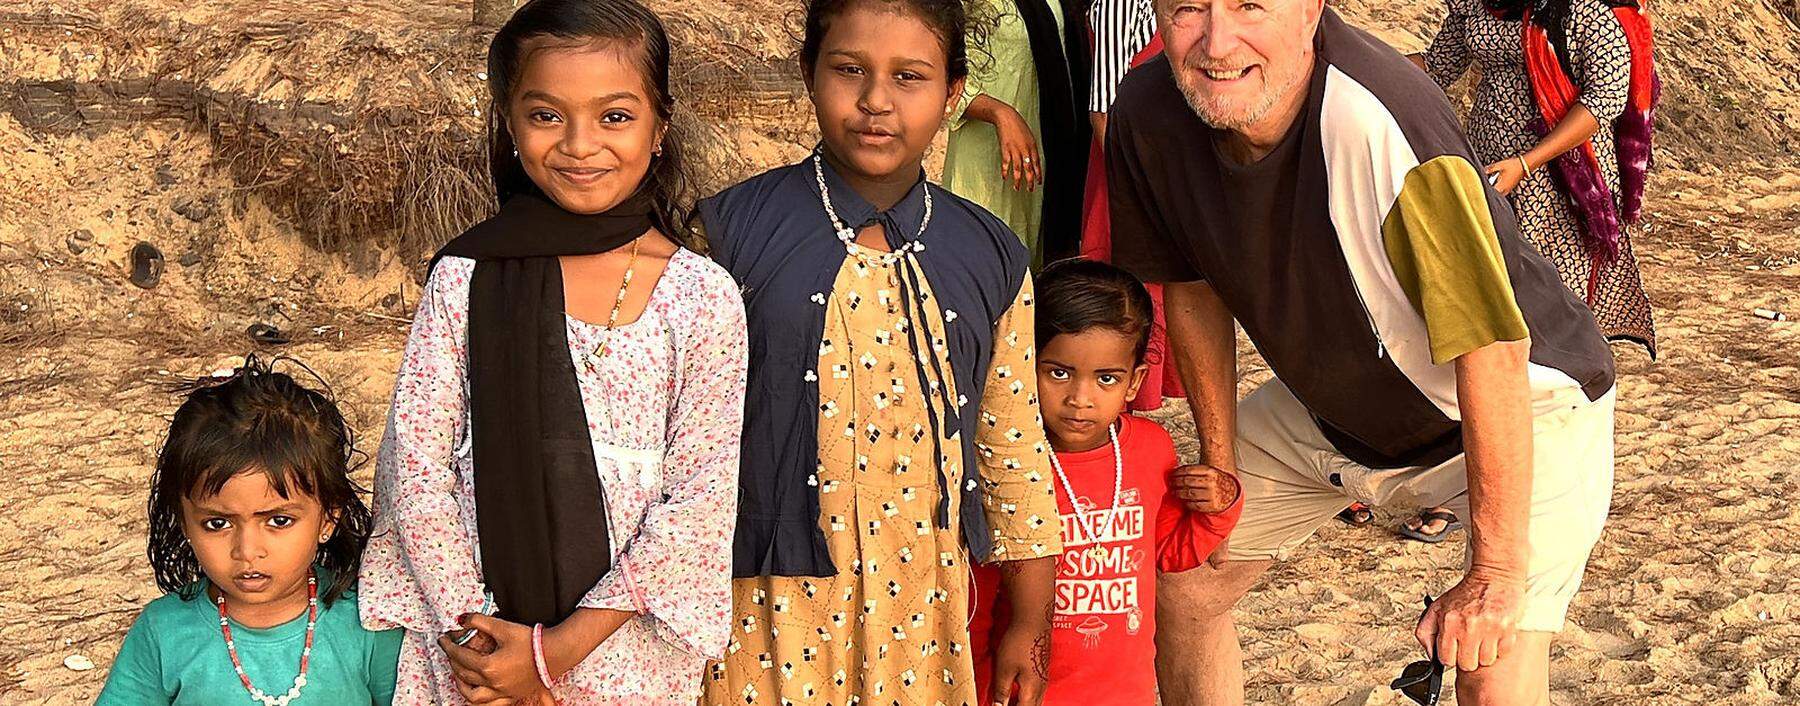 Folke Tegetthoff (rechts) mit Kindern in Indien